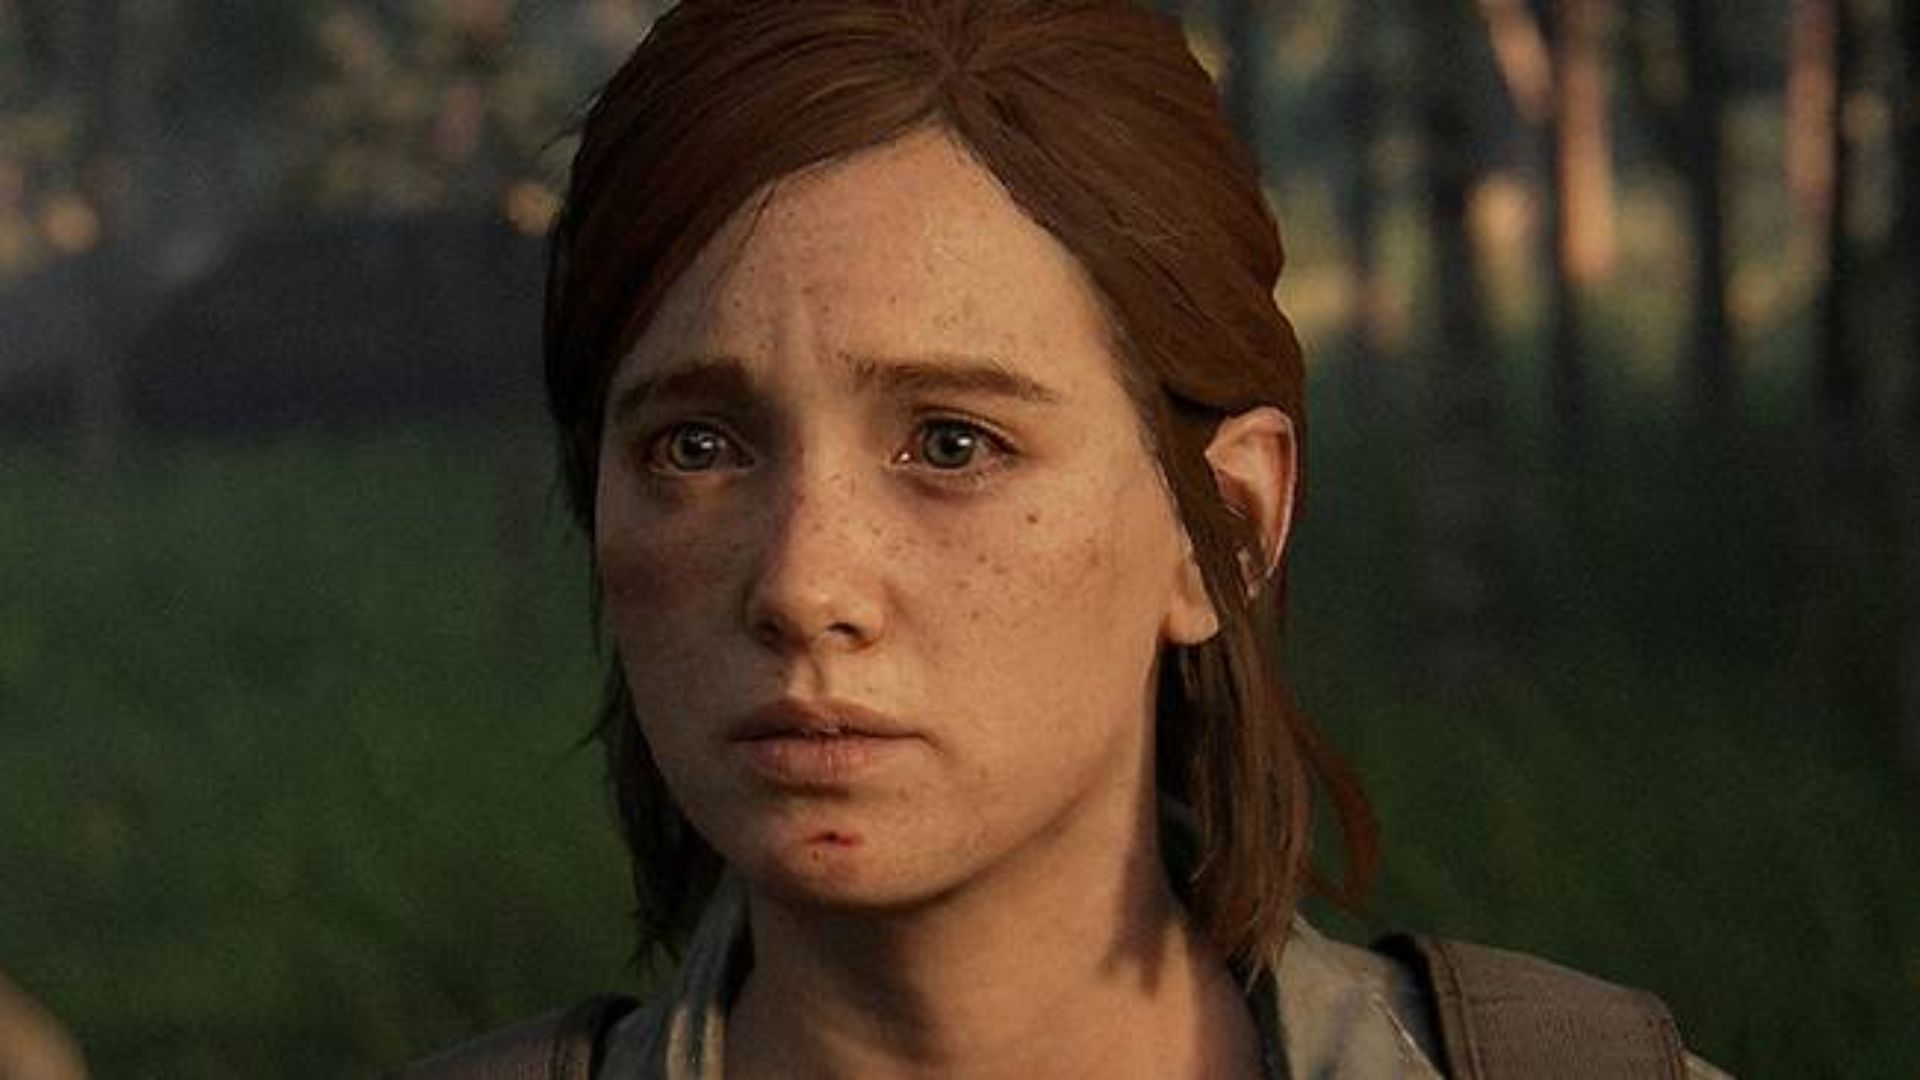 Bella Ramsey: 10 produções com a Ellie de The Last of Us